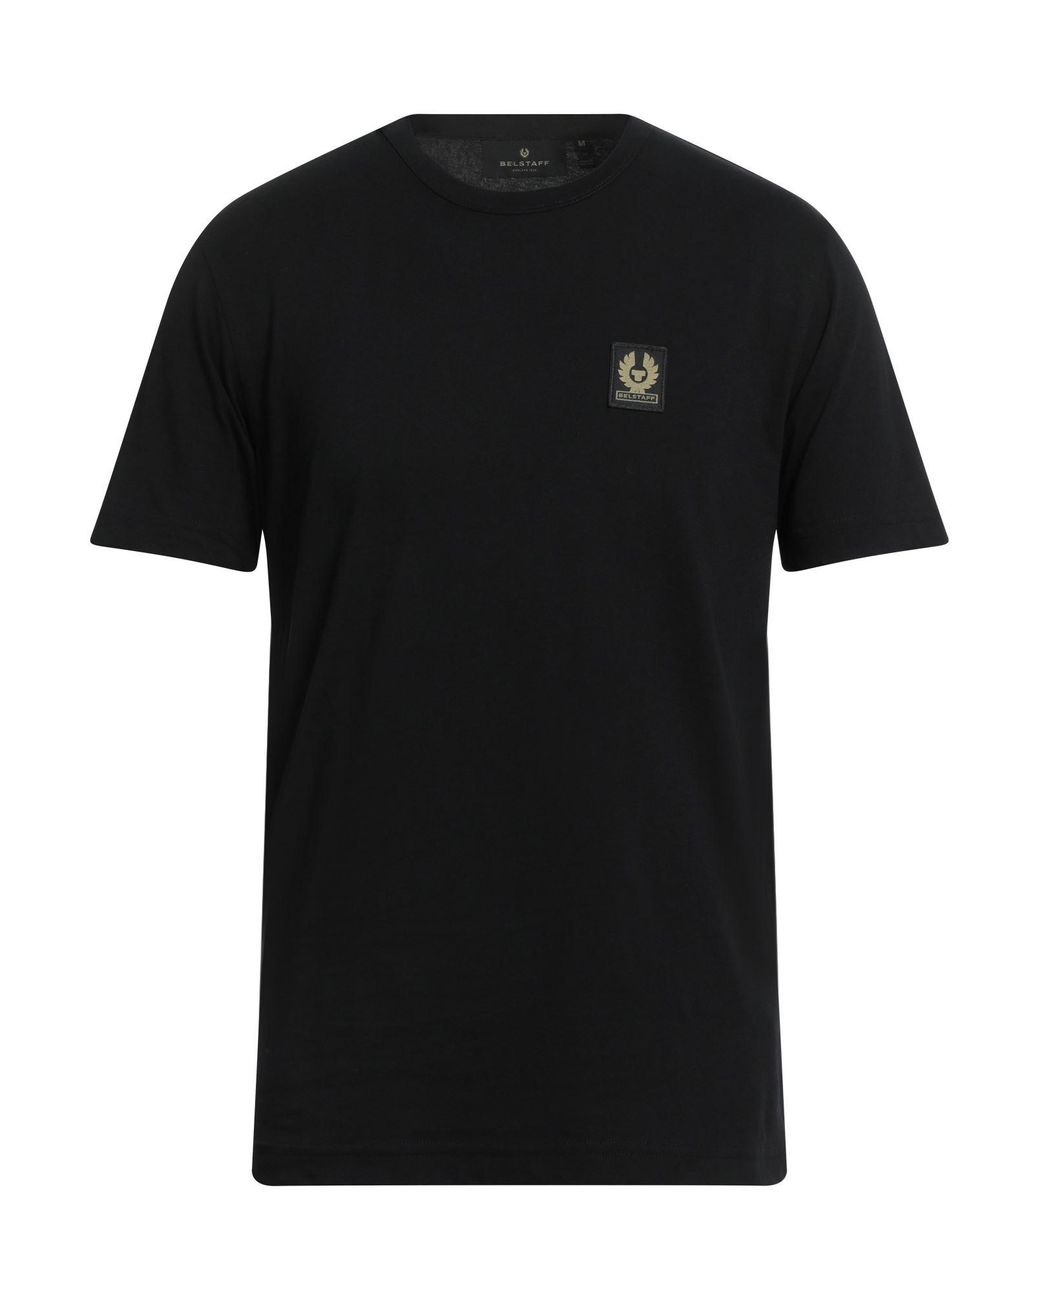 Belstaff T-shirt in Black for Men | Lyst